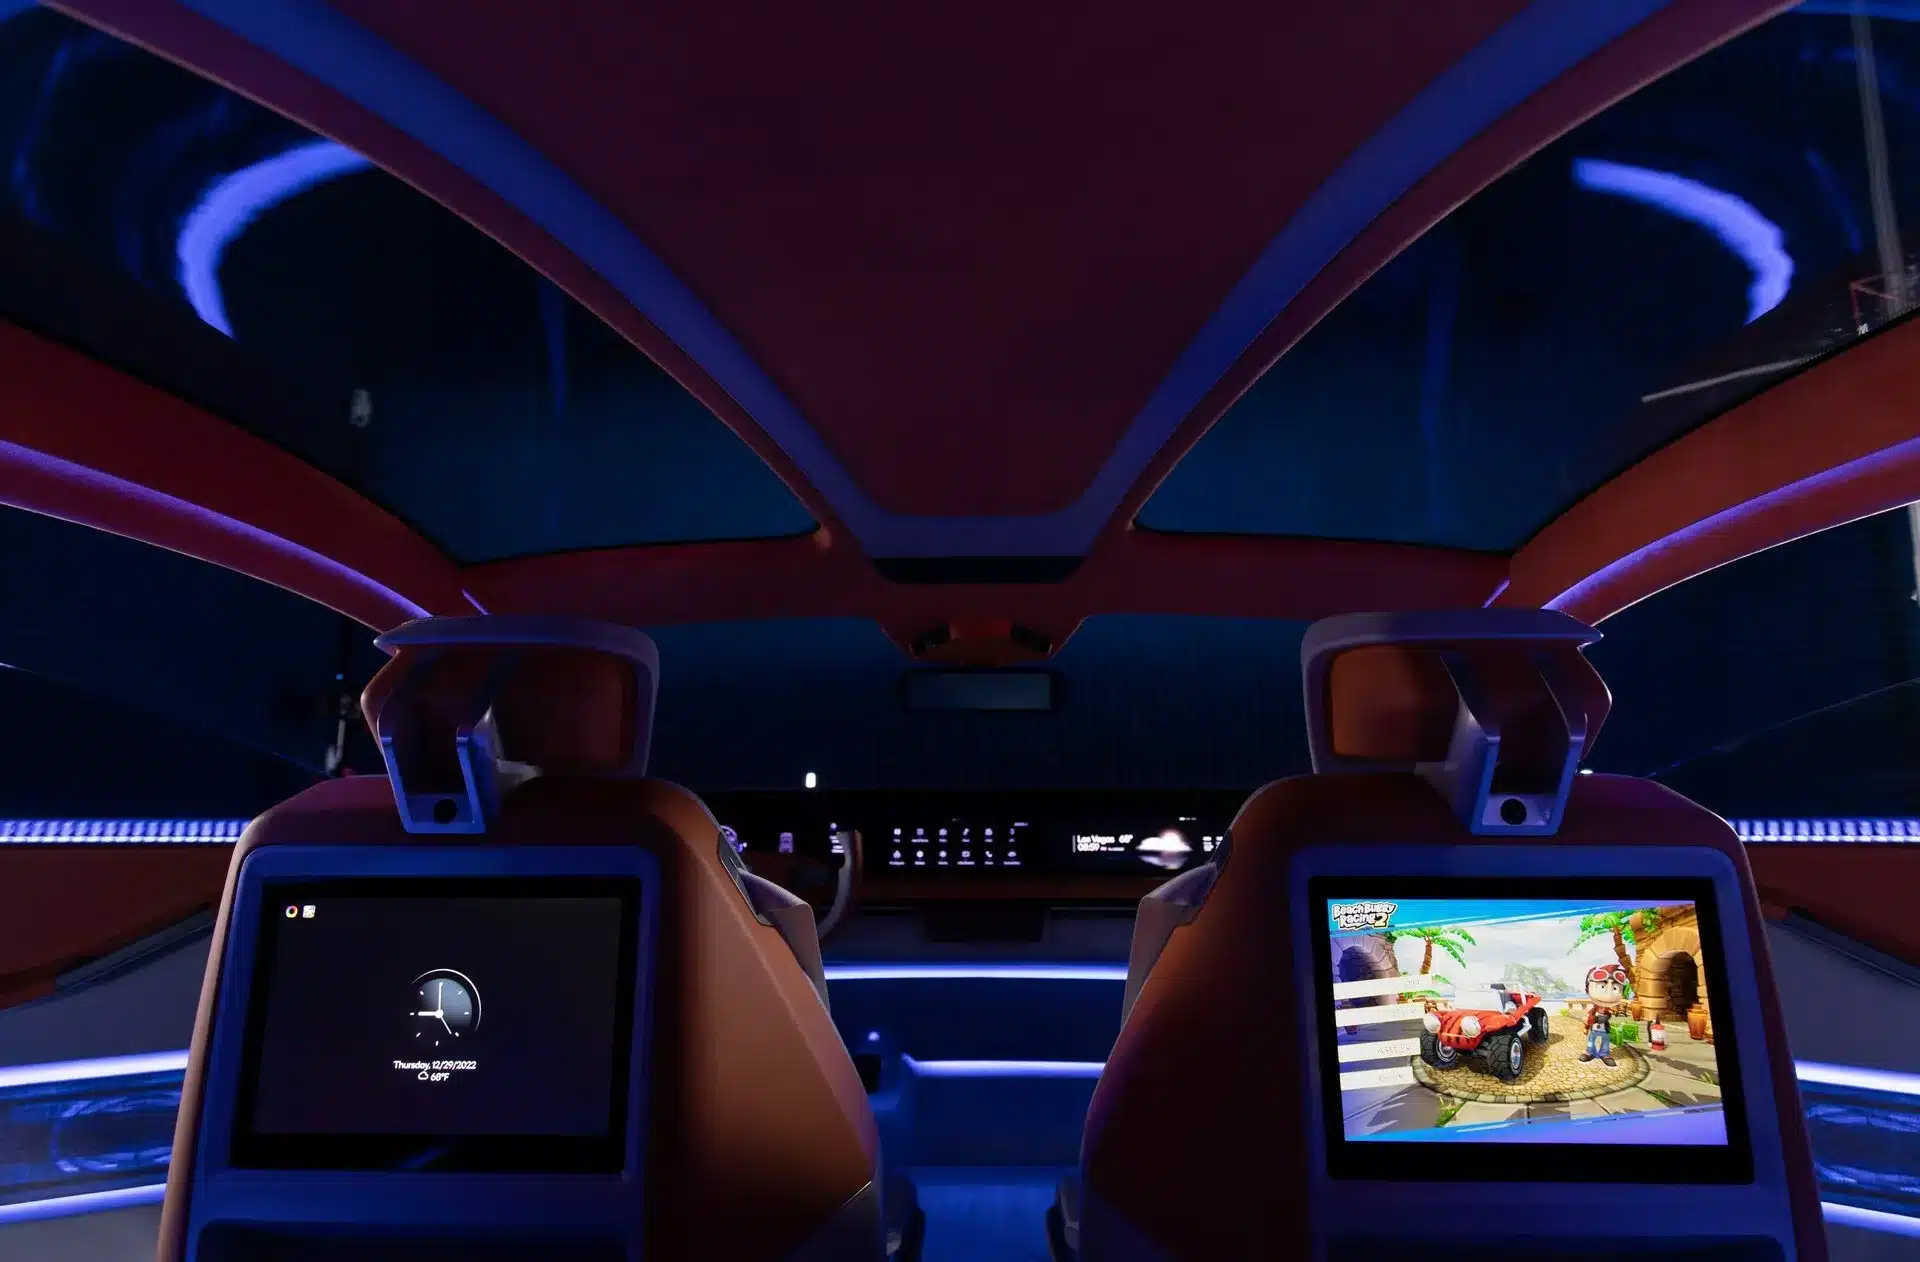 Qualcomm Snapdragon Digital Chassis Concept car